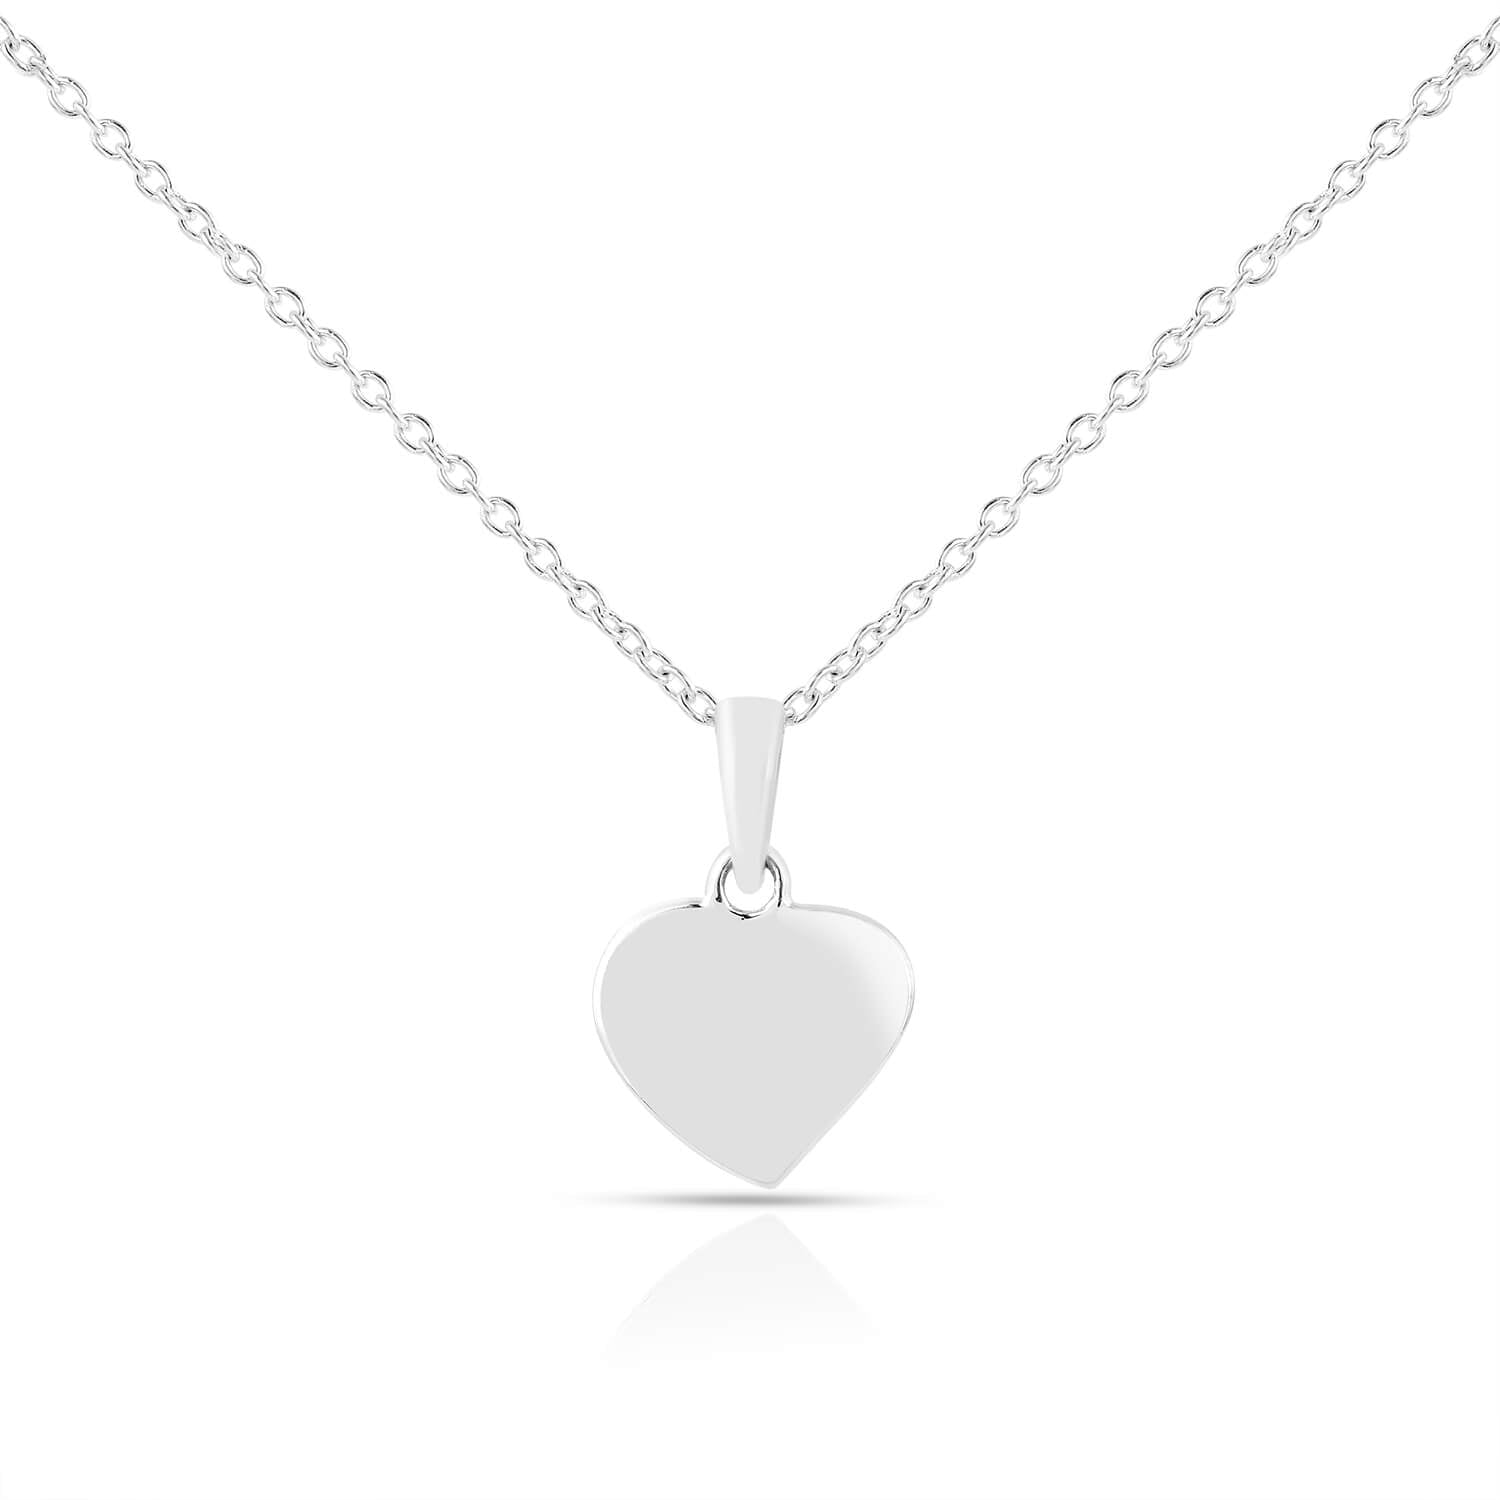 Stylized Heart Shape Minimalist Silver Pendant